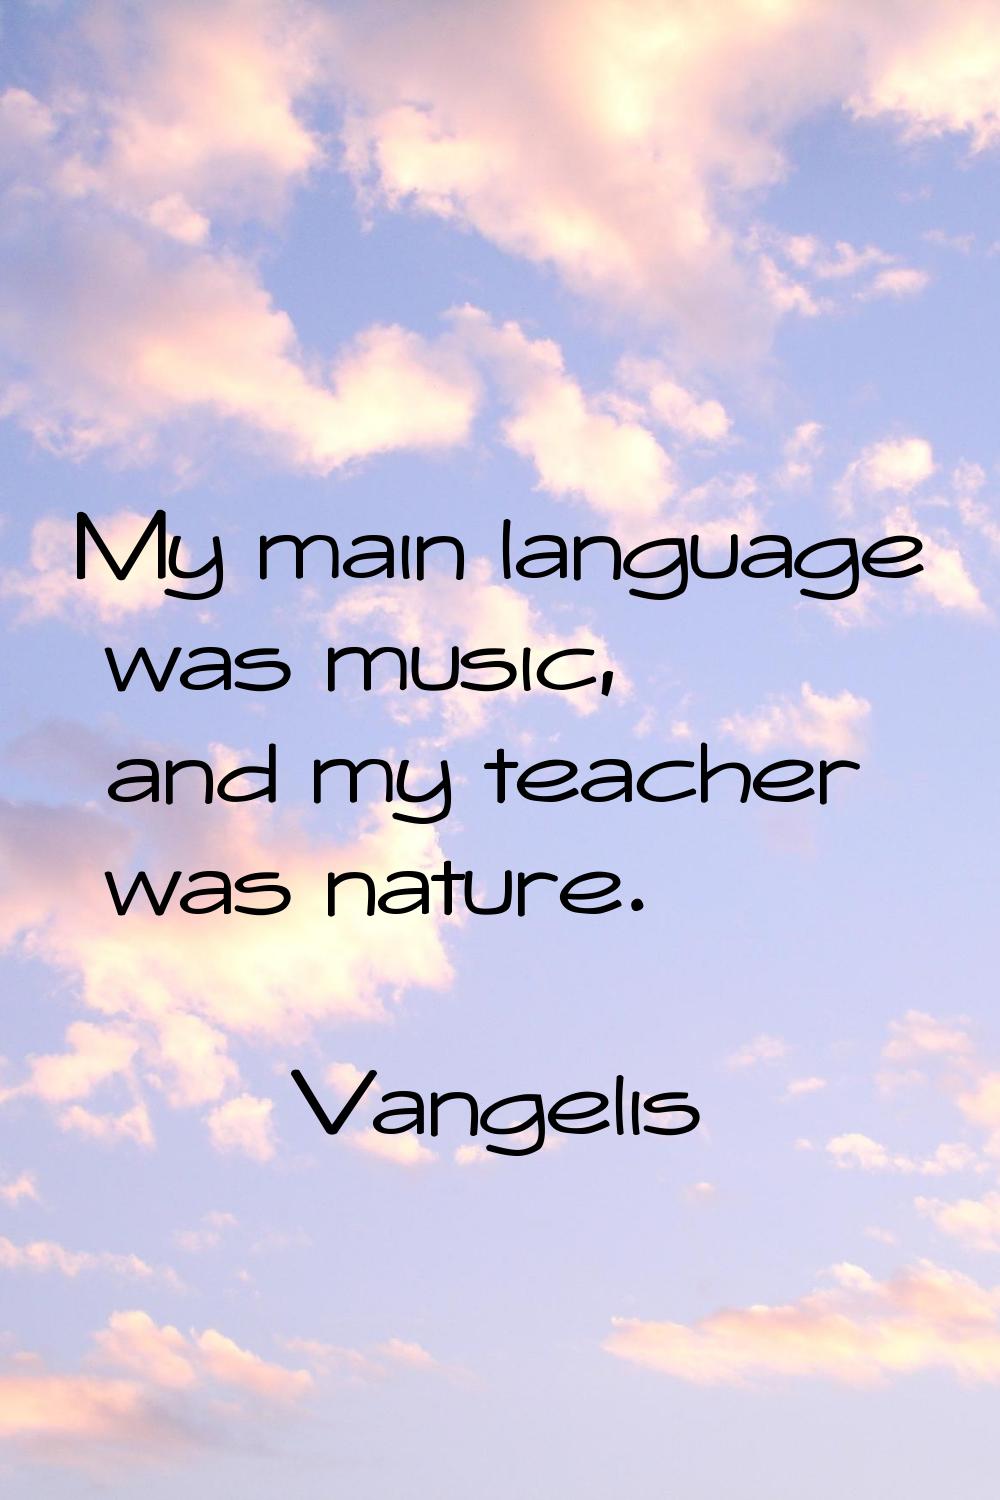 My main language was music, and my teacher was nature.